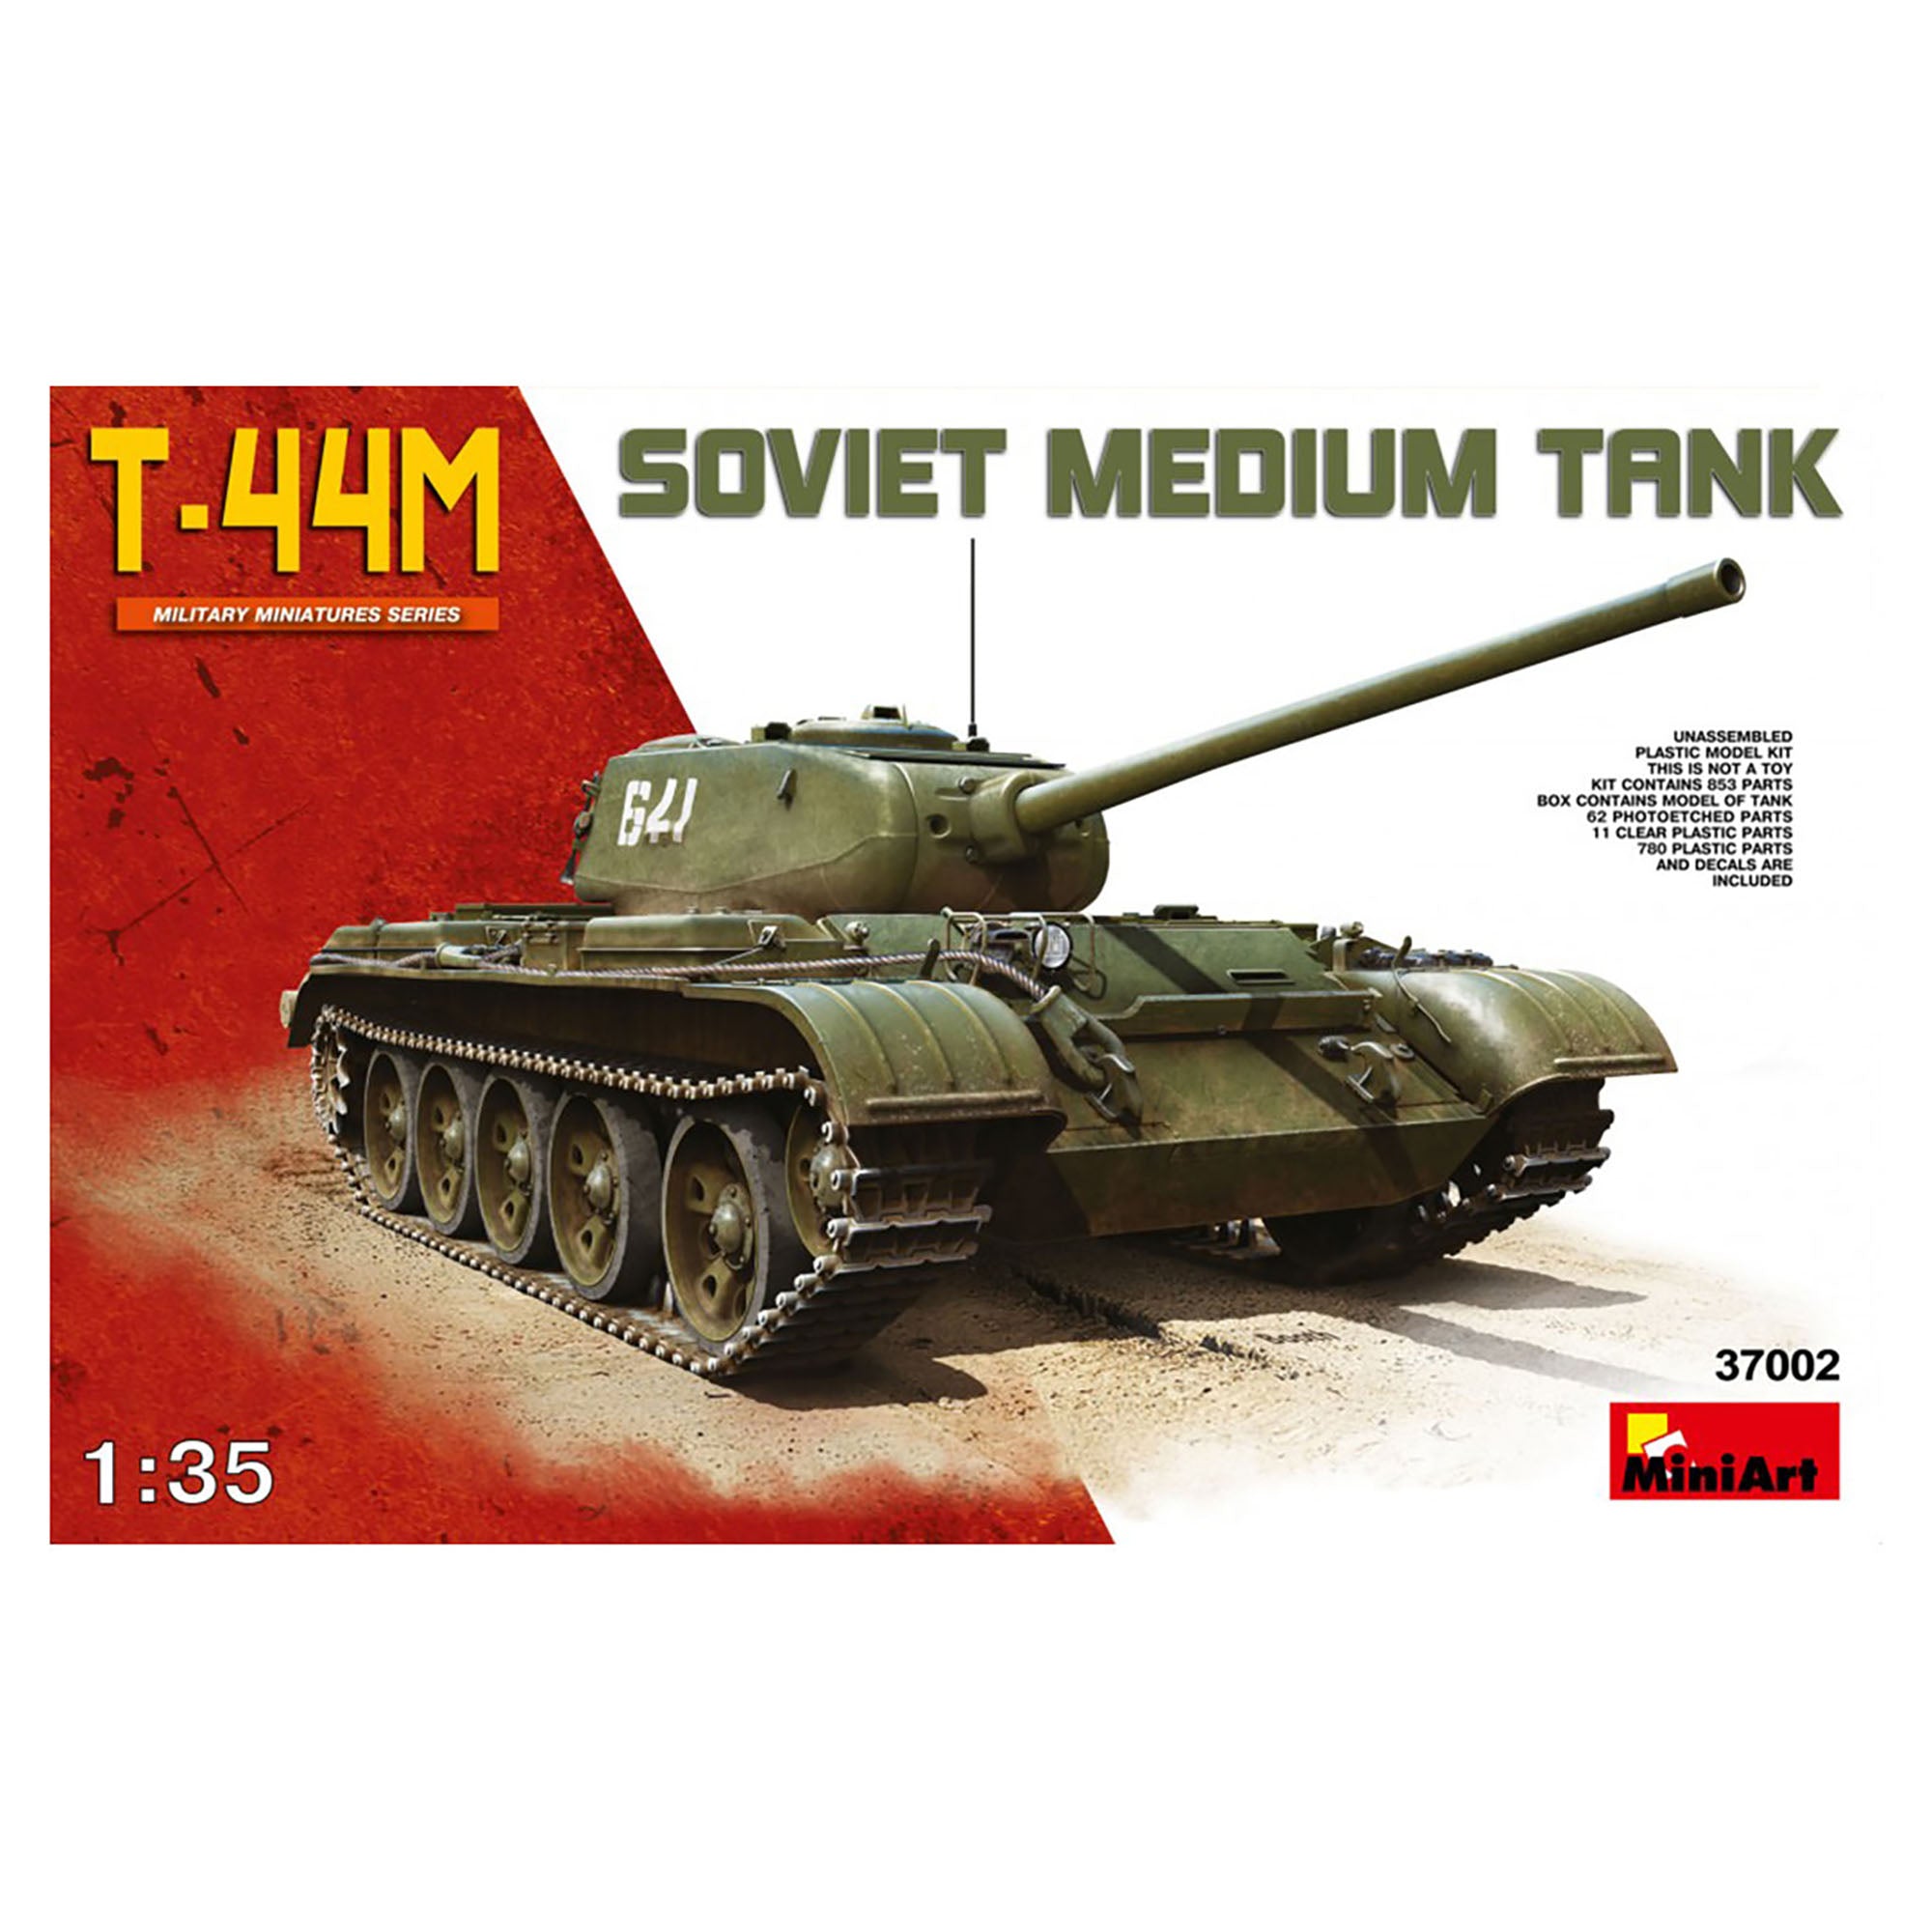 MiniArt 37002 1/35 T-44M Soviet Medium Tank Model Kit